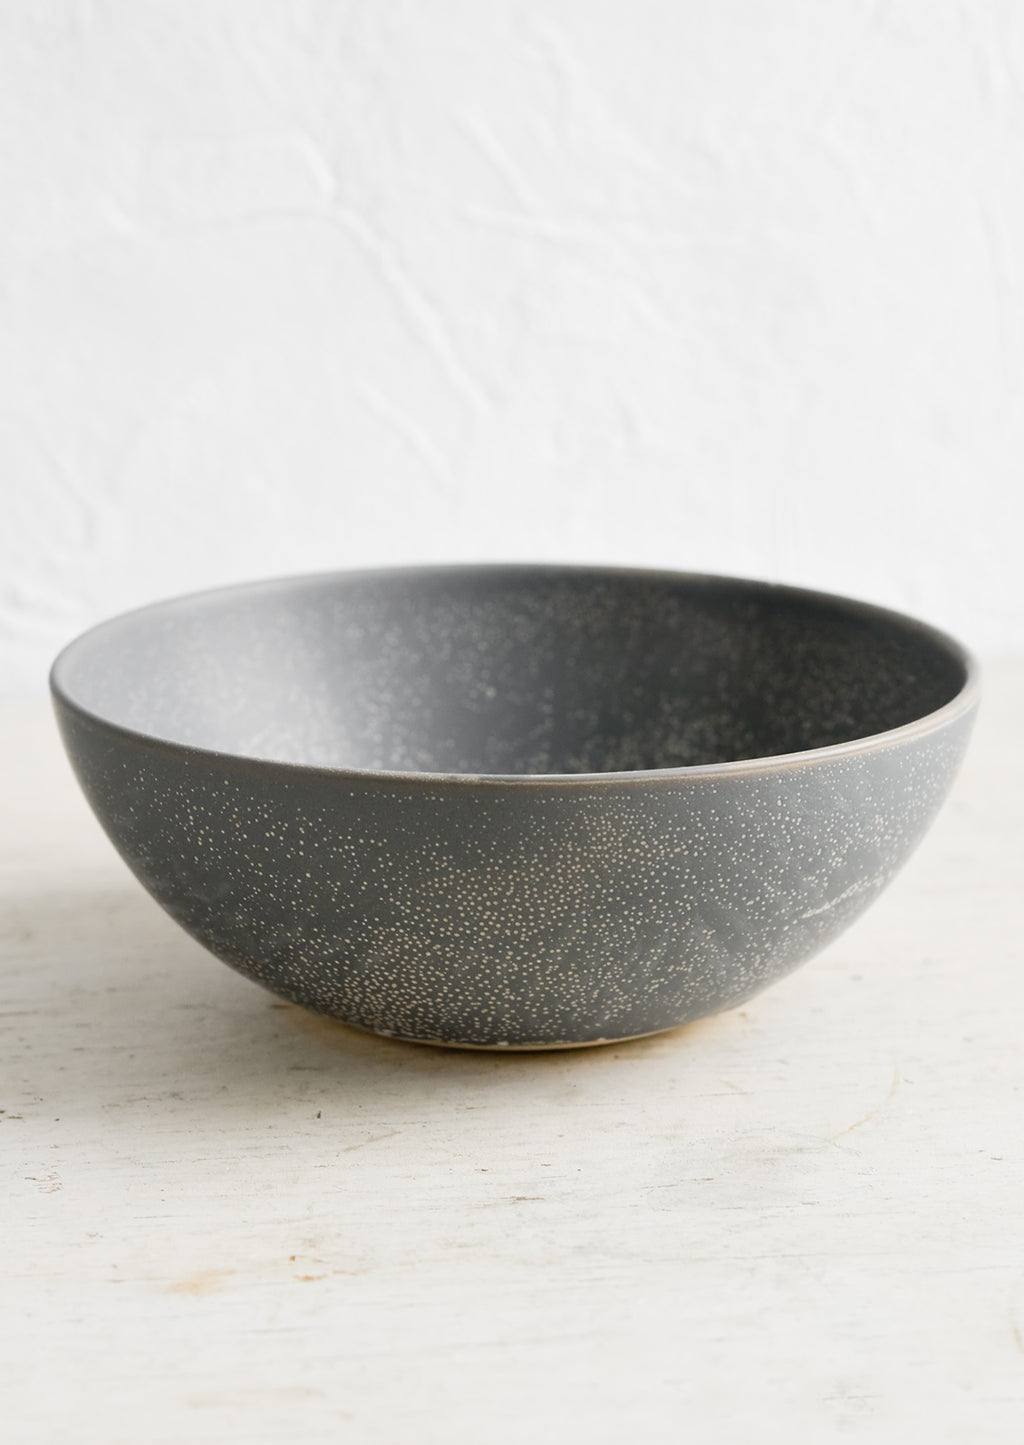 1: A dark grey ceramic bowl with light tan speckles.